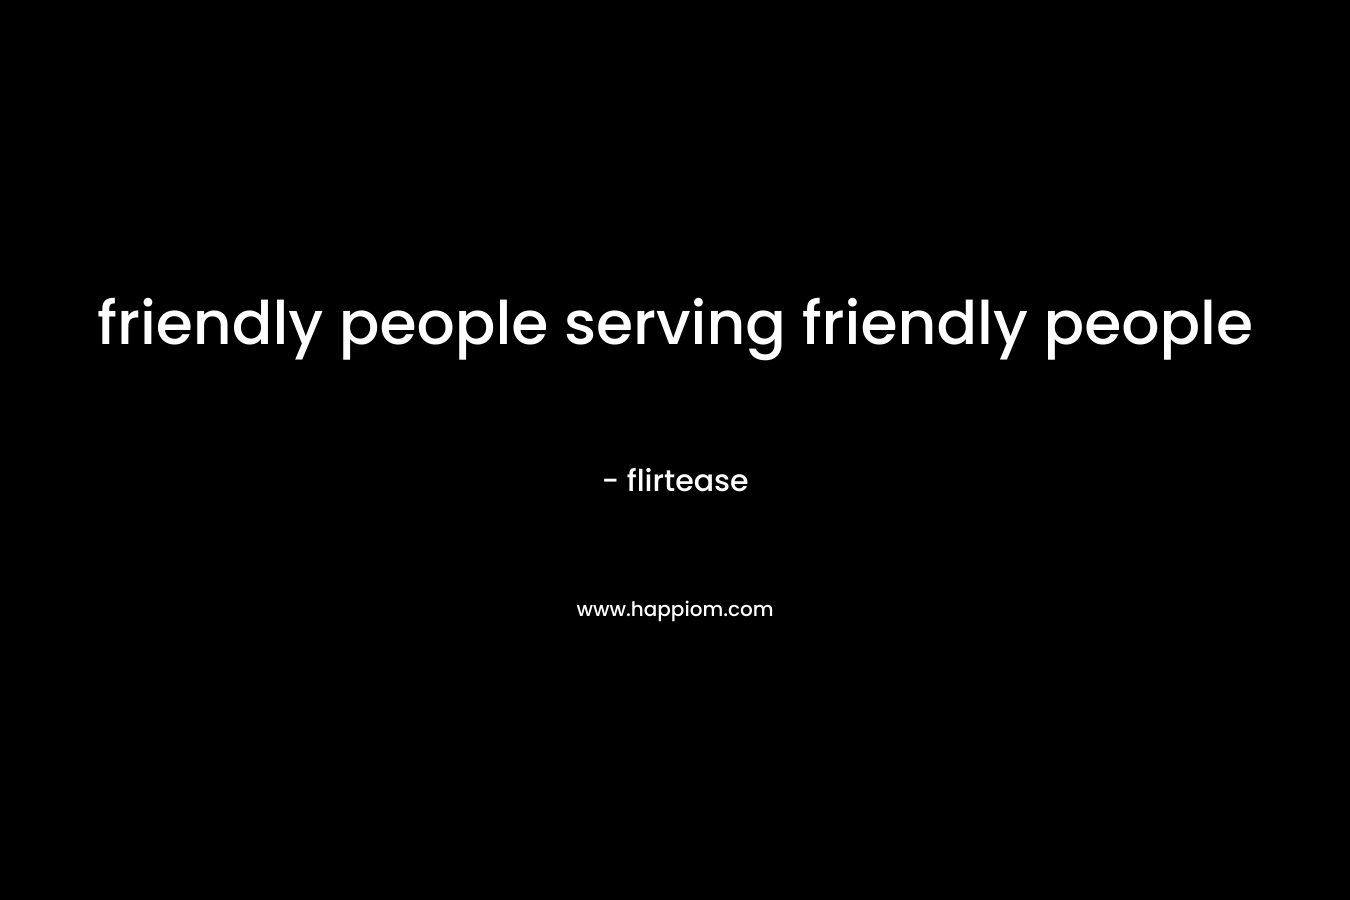 friendly people serving friendly people